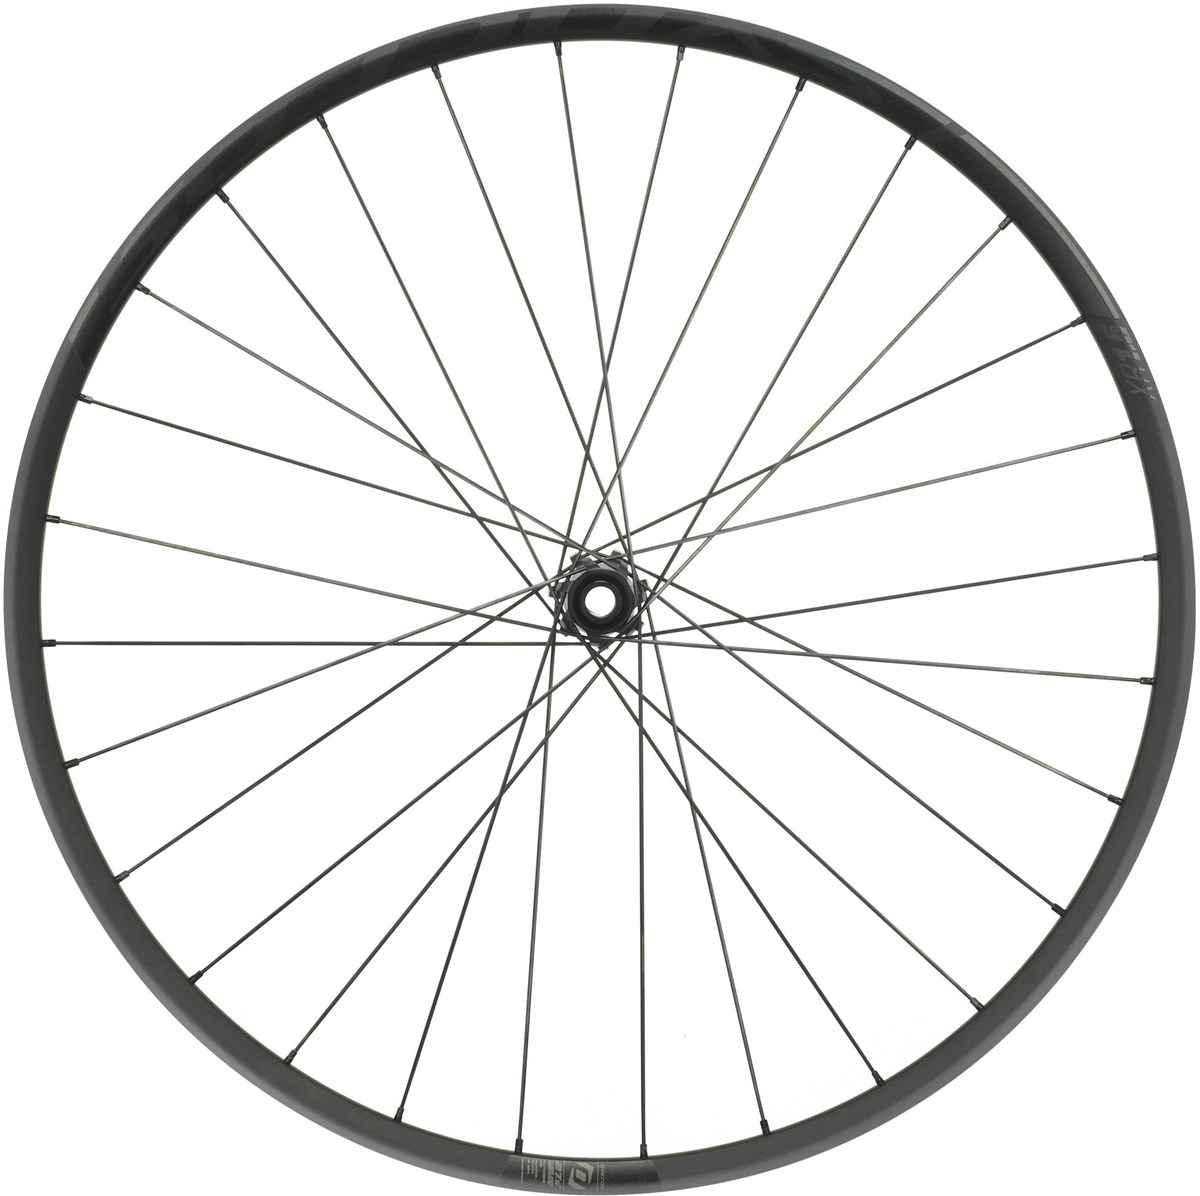 Syncros XR1.5 650b MTB Wheel product image